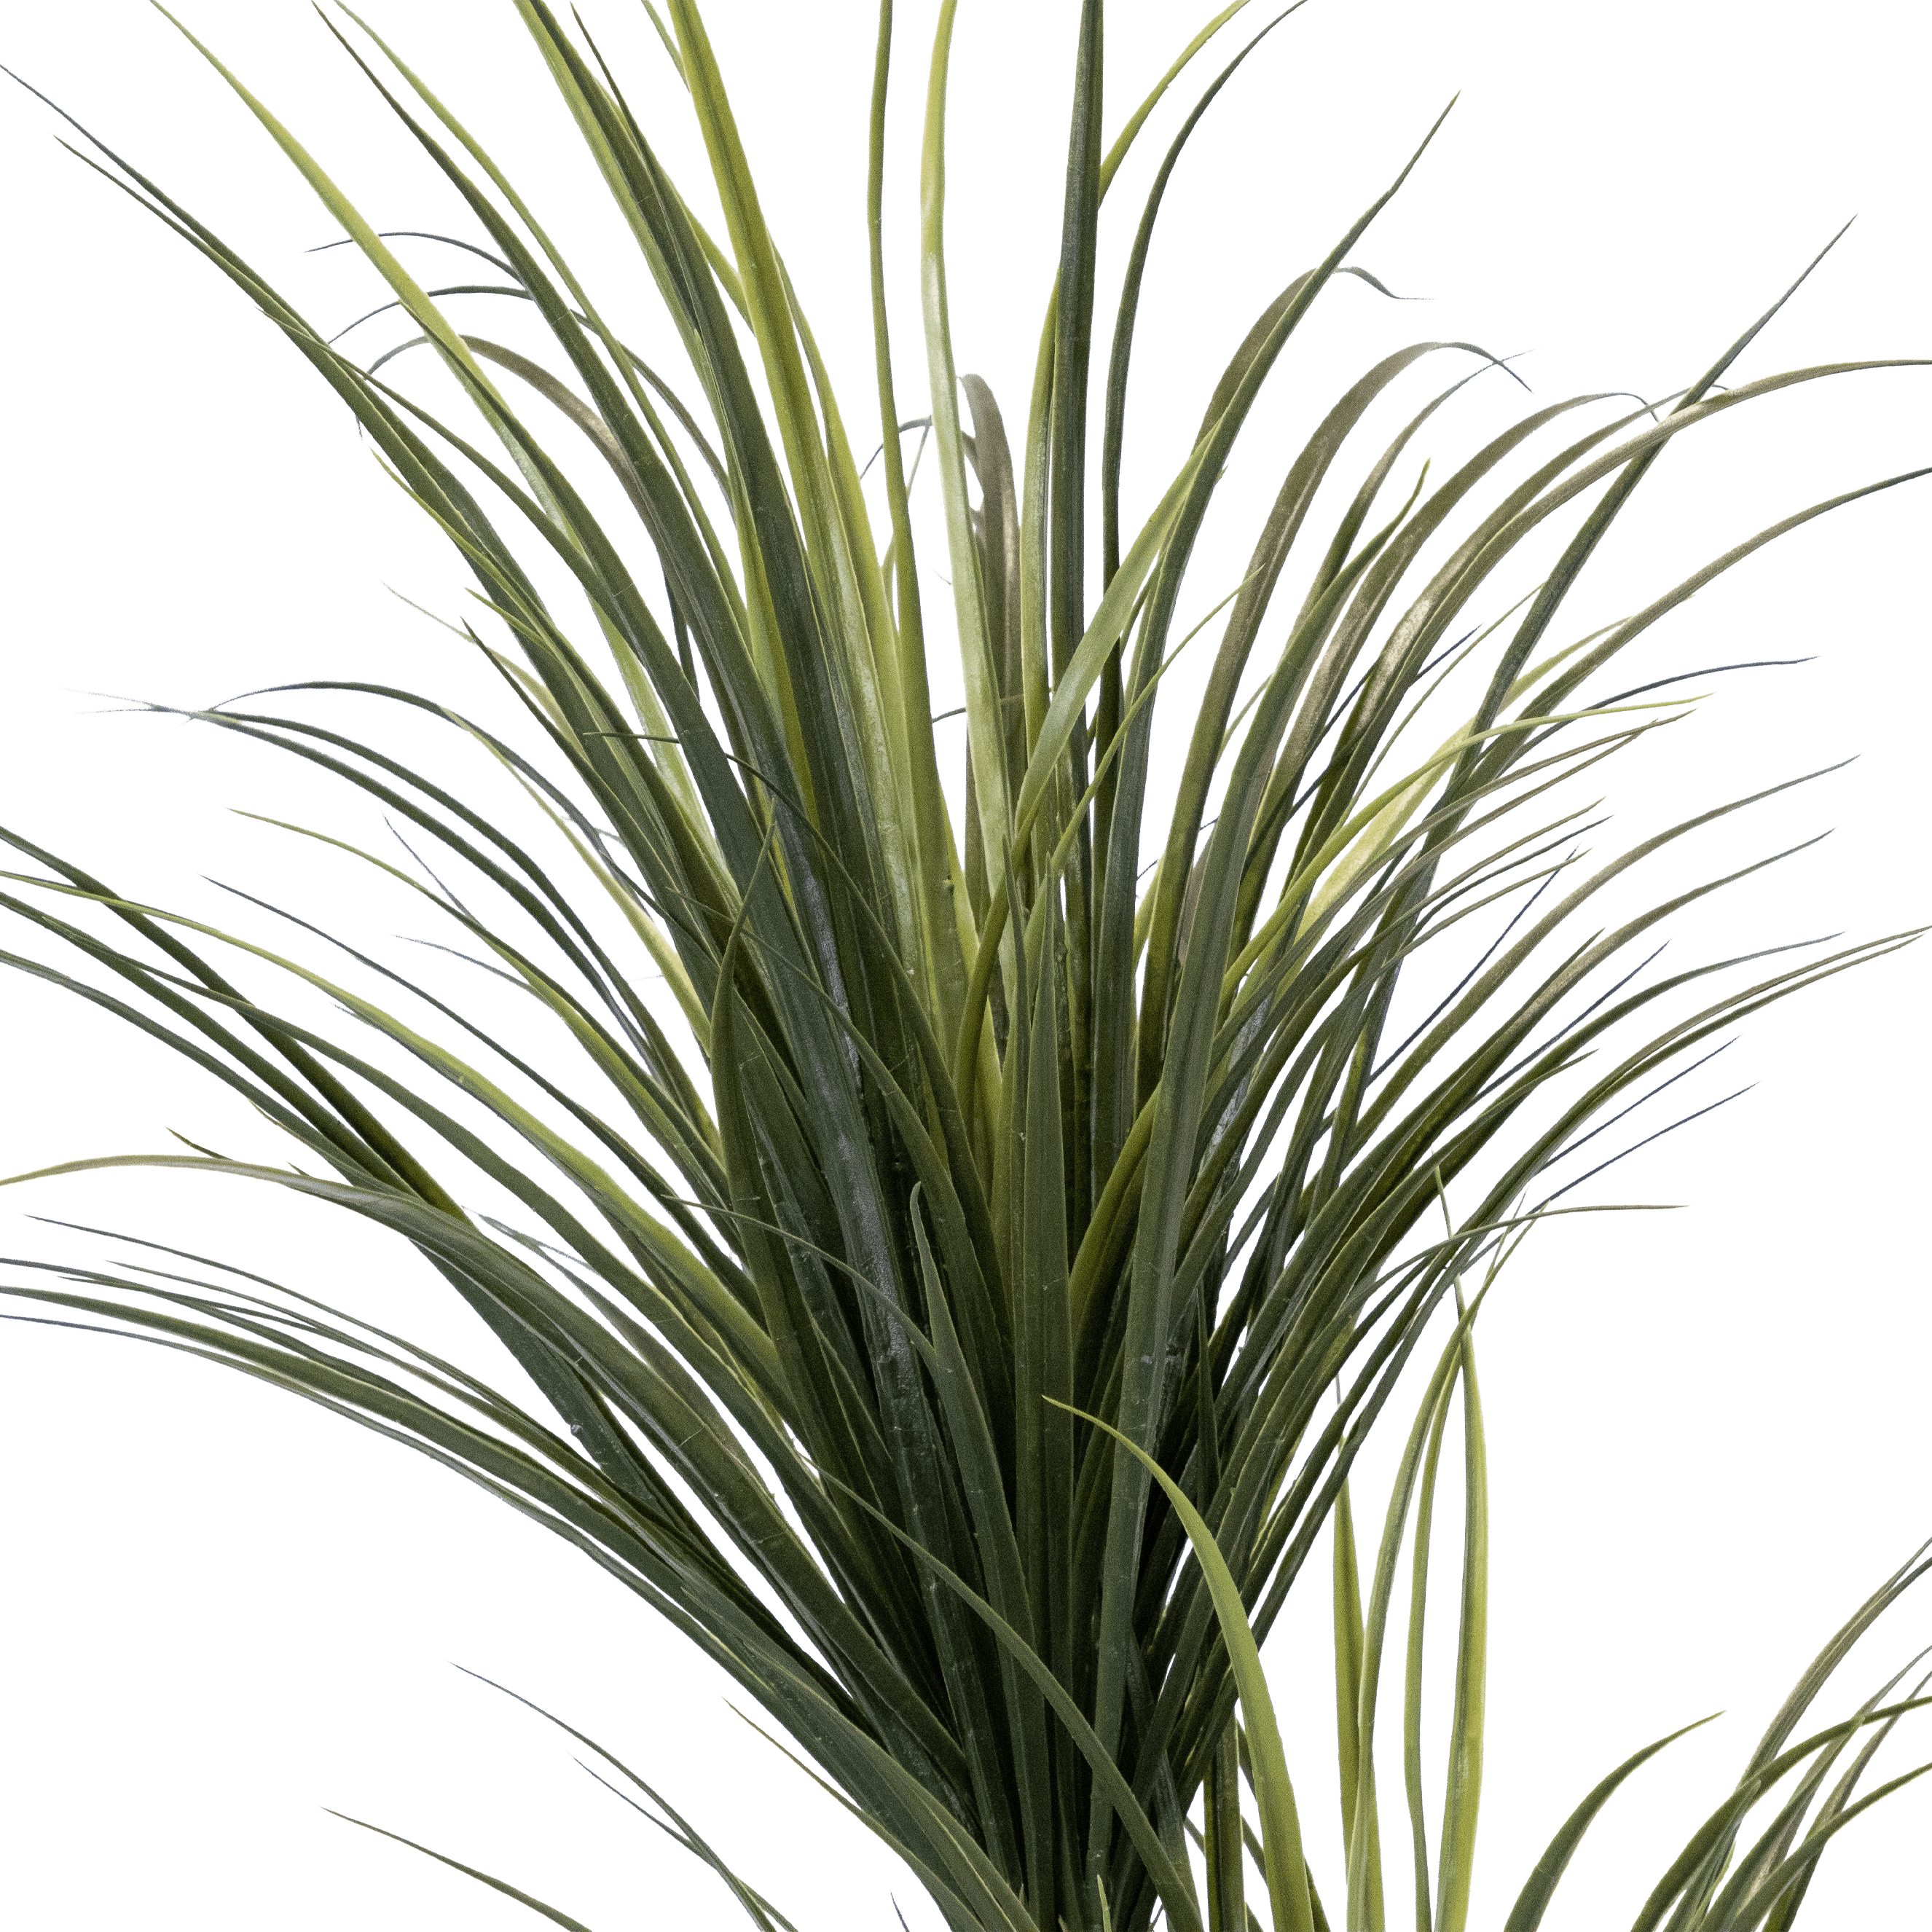 Ponytail Palm 175cm